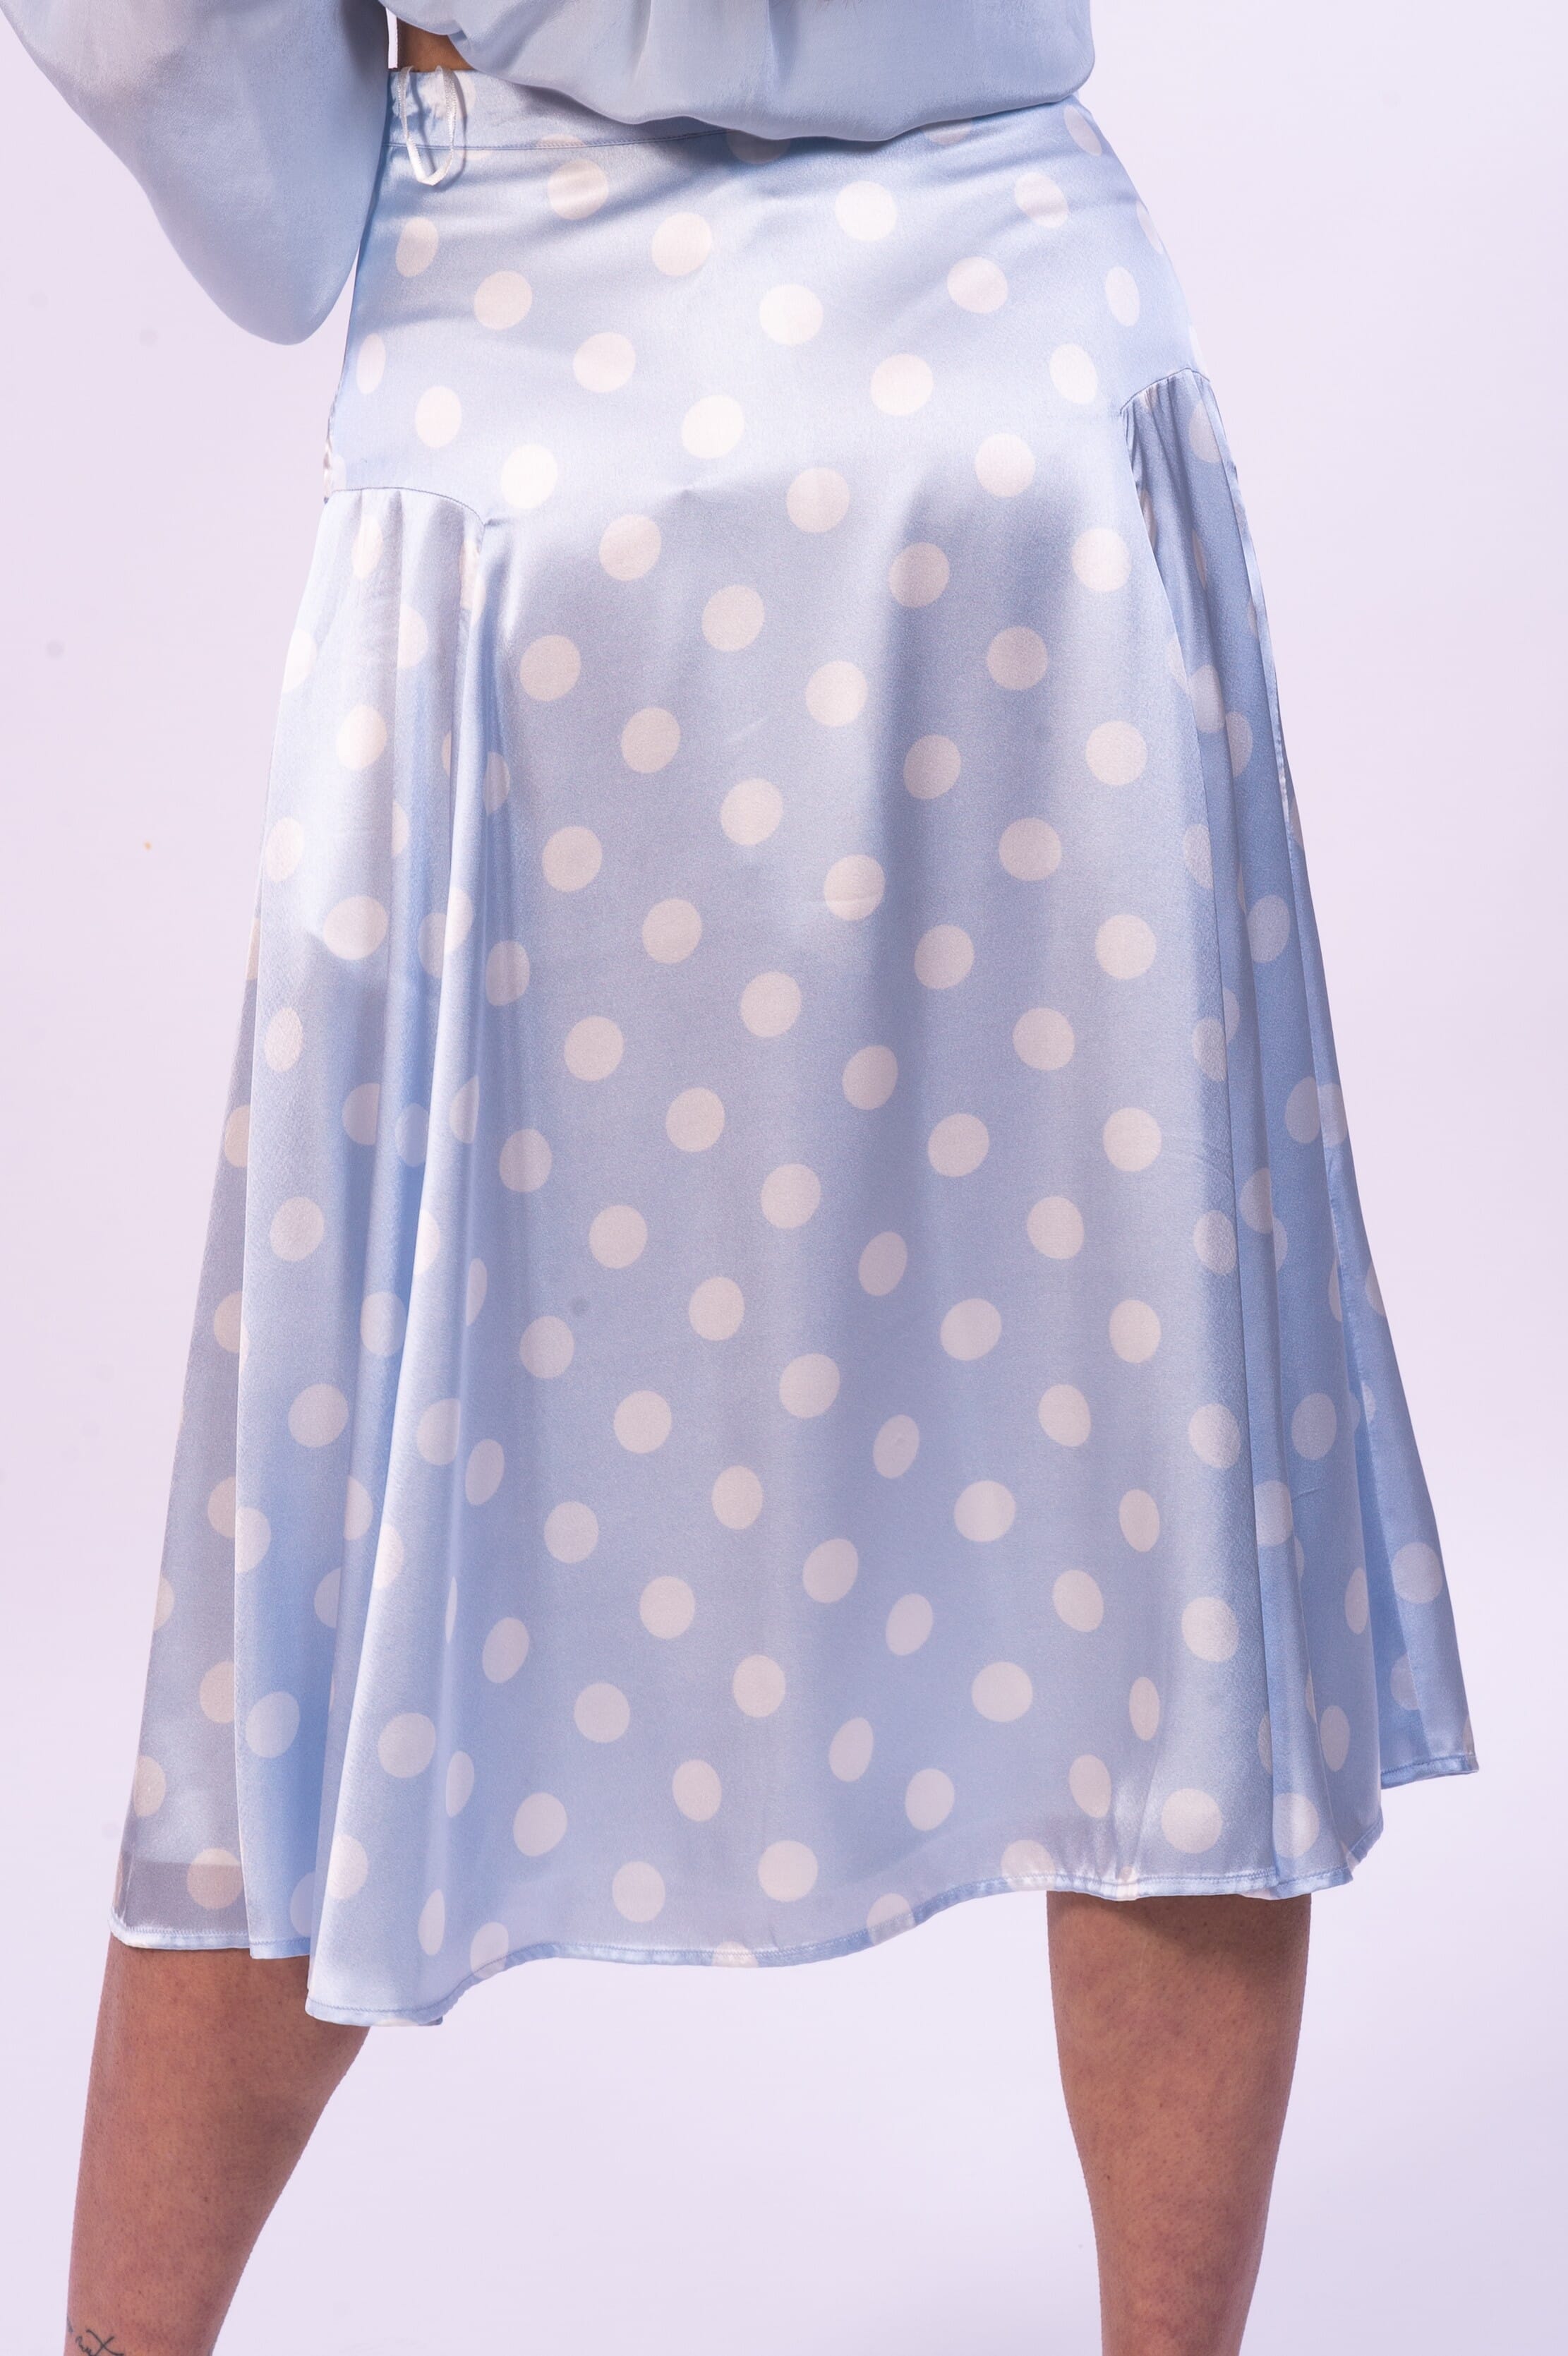 Skirt With Polka Dots Fracomina